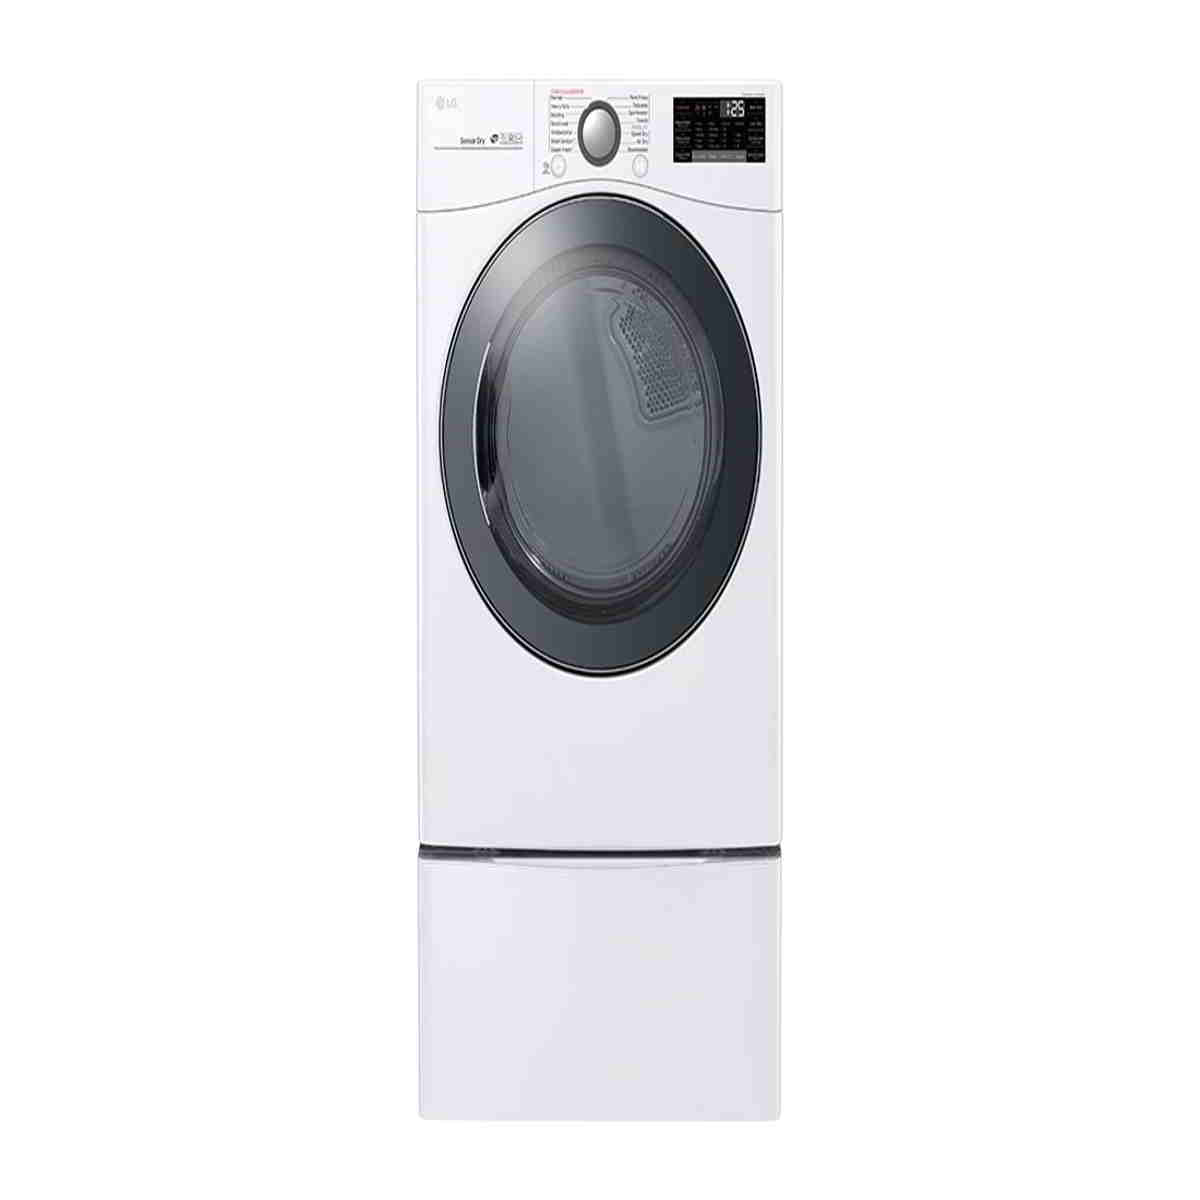 How to turn off sensor dry on LG dryer